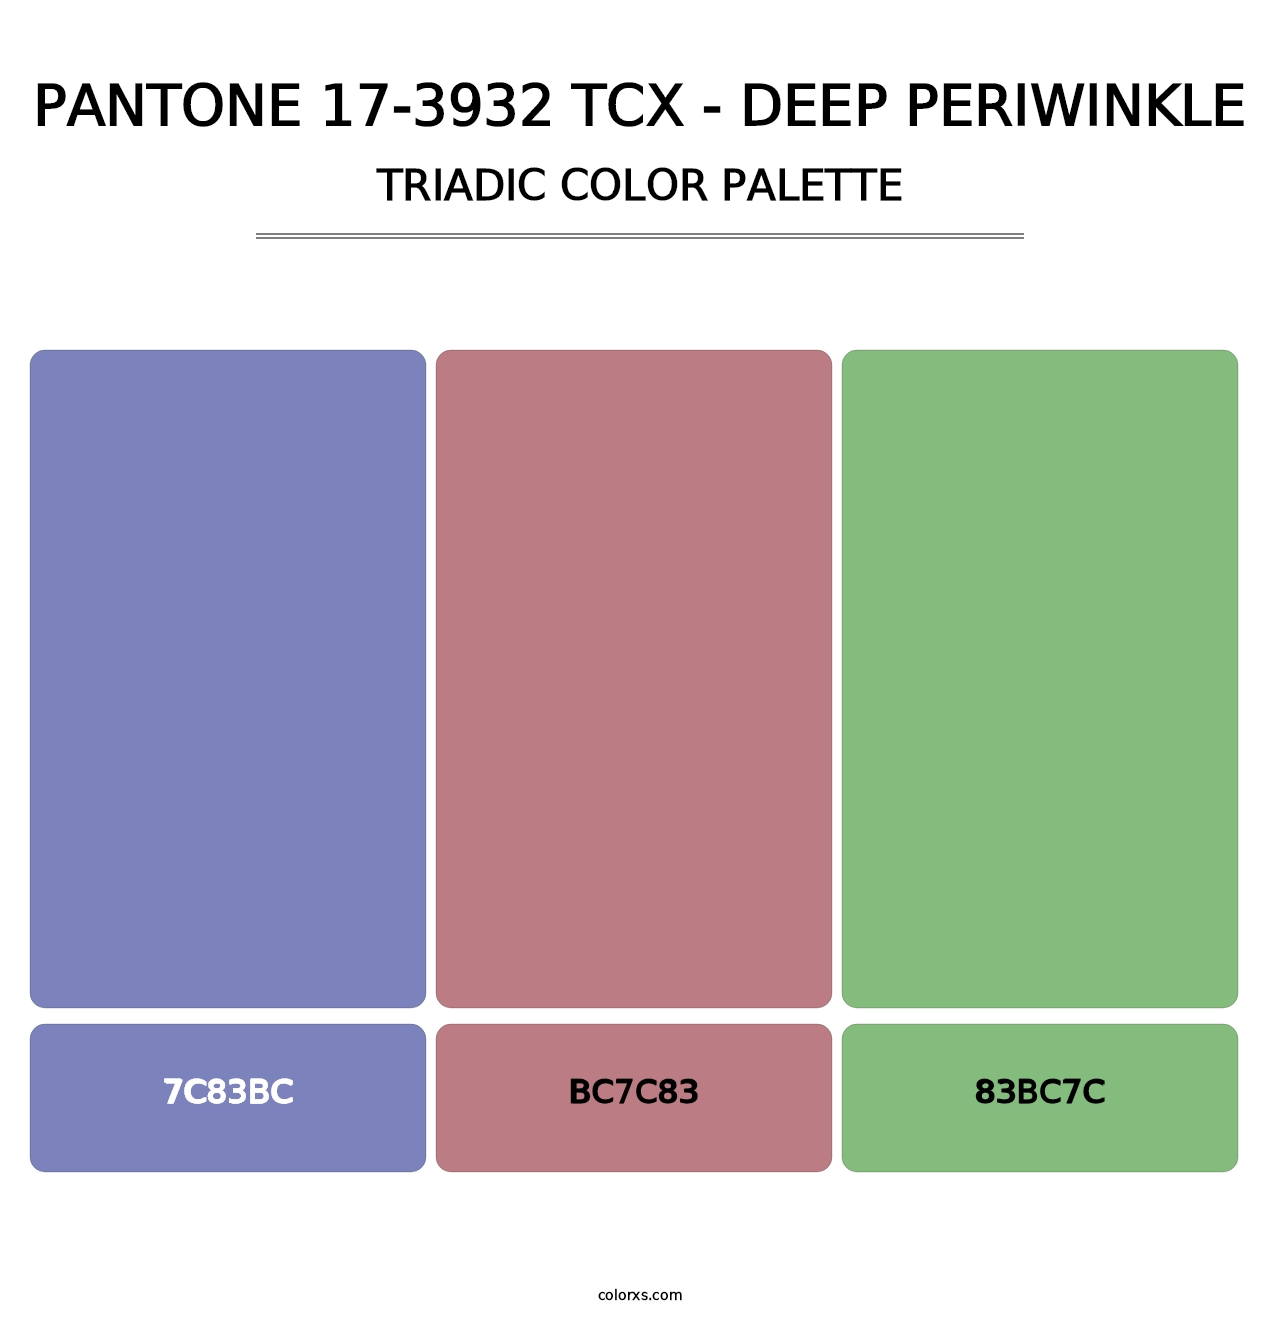 PANTONE 17-3932 TCX - Deep Periwinkle - Triadic Color Palette